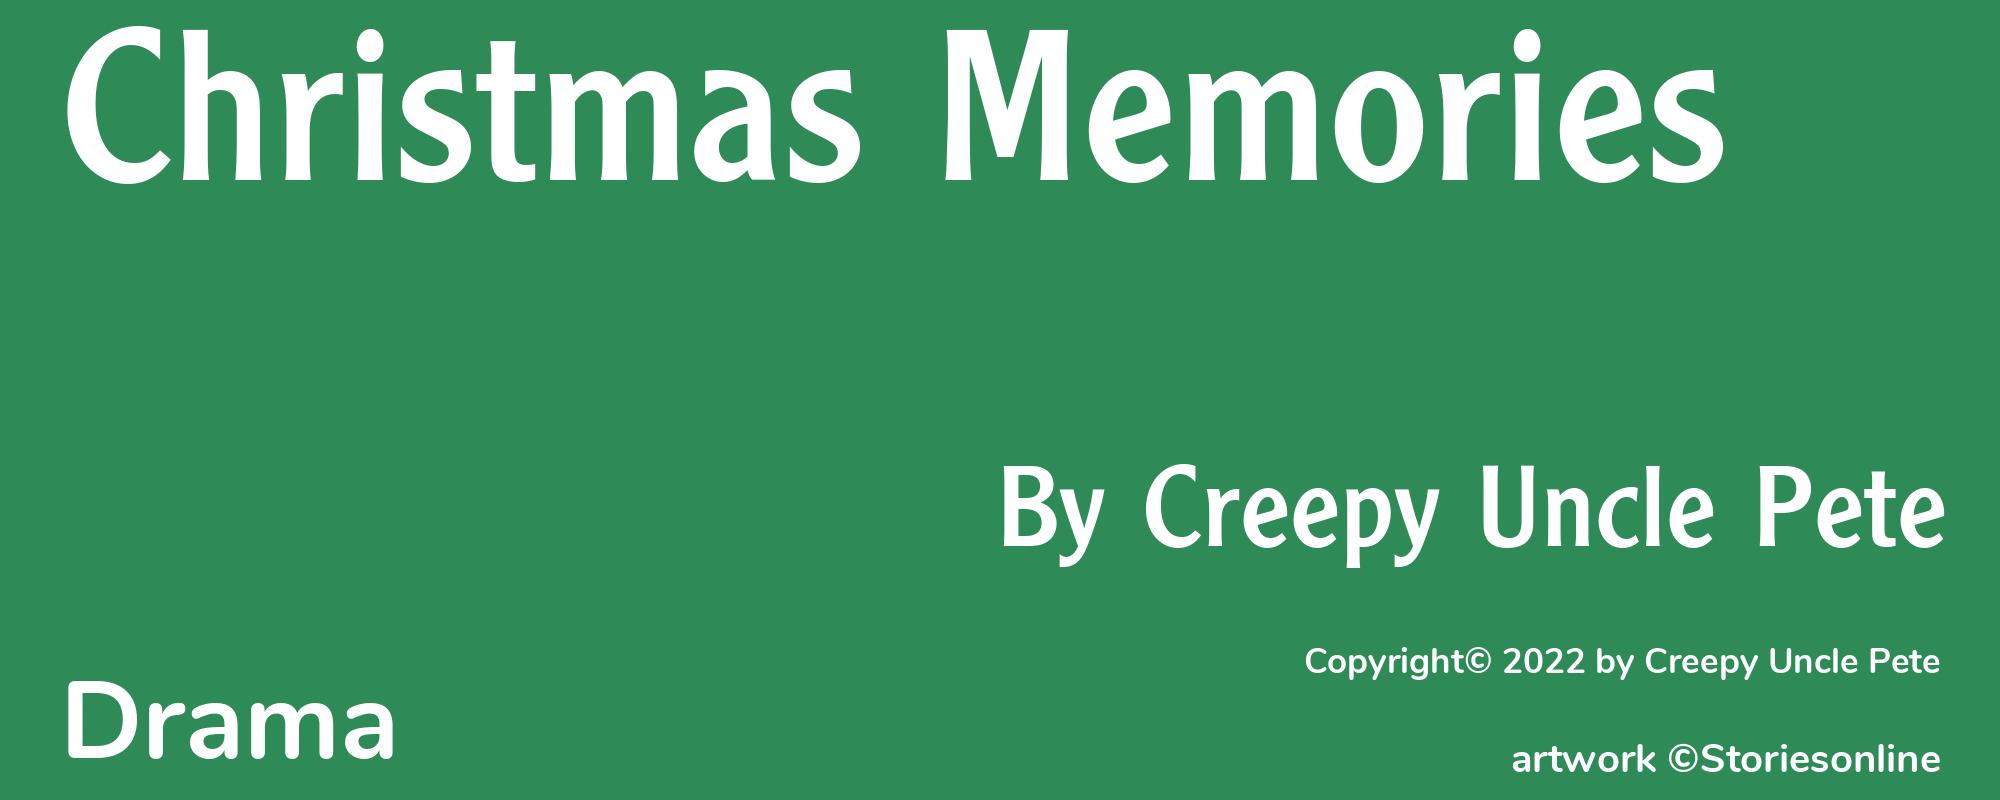 Christmas Memories - Cover